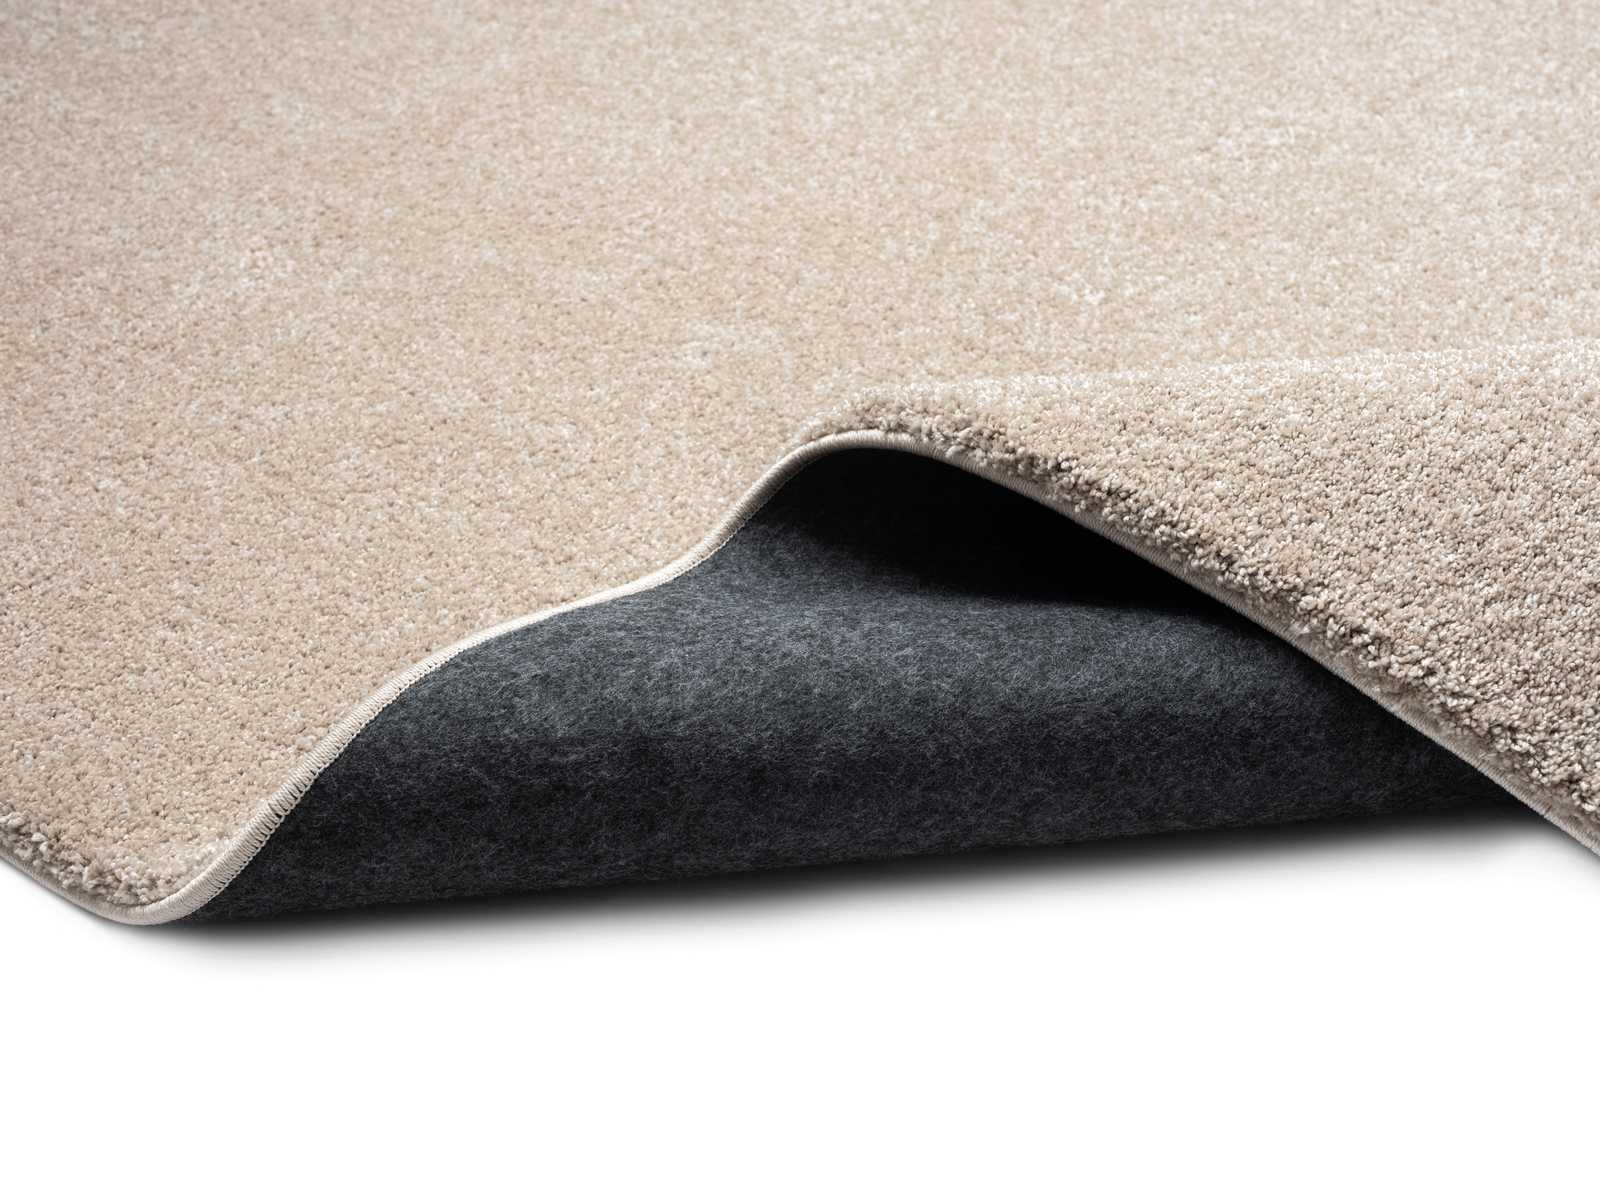             Soft short pile carpet in beige - 150 x 80 cm
        